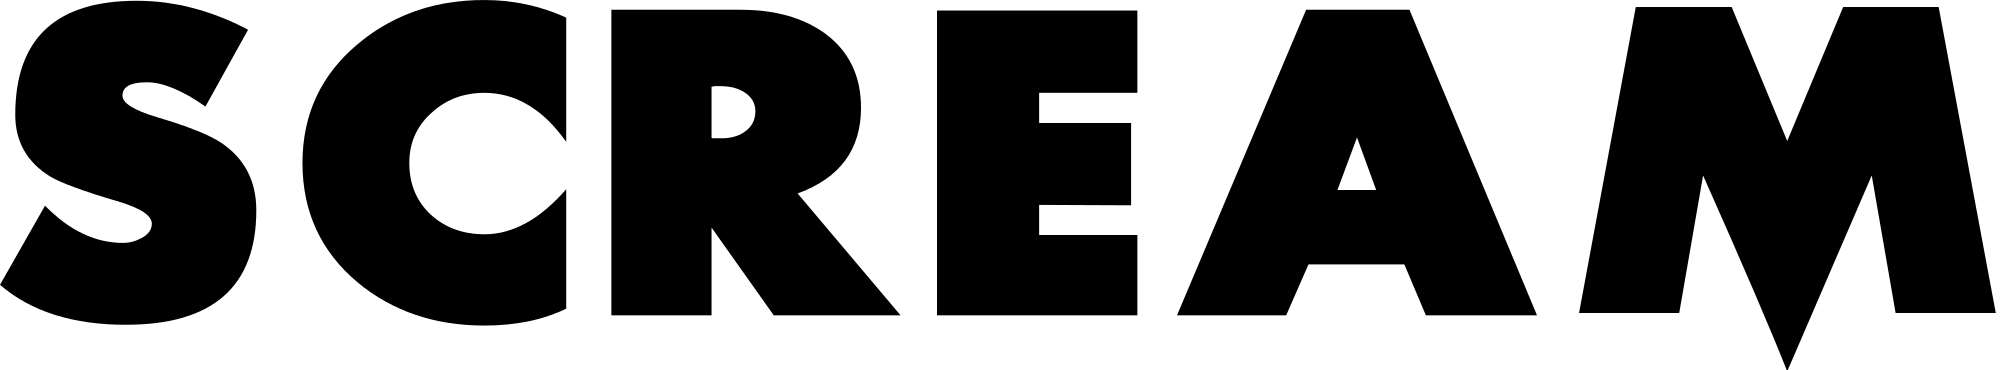 Scream Logo PNG Pic